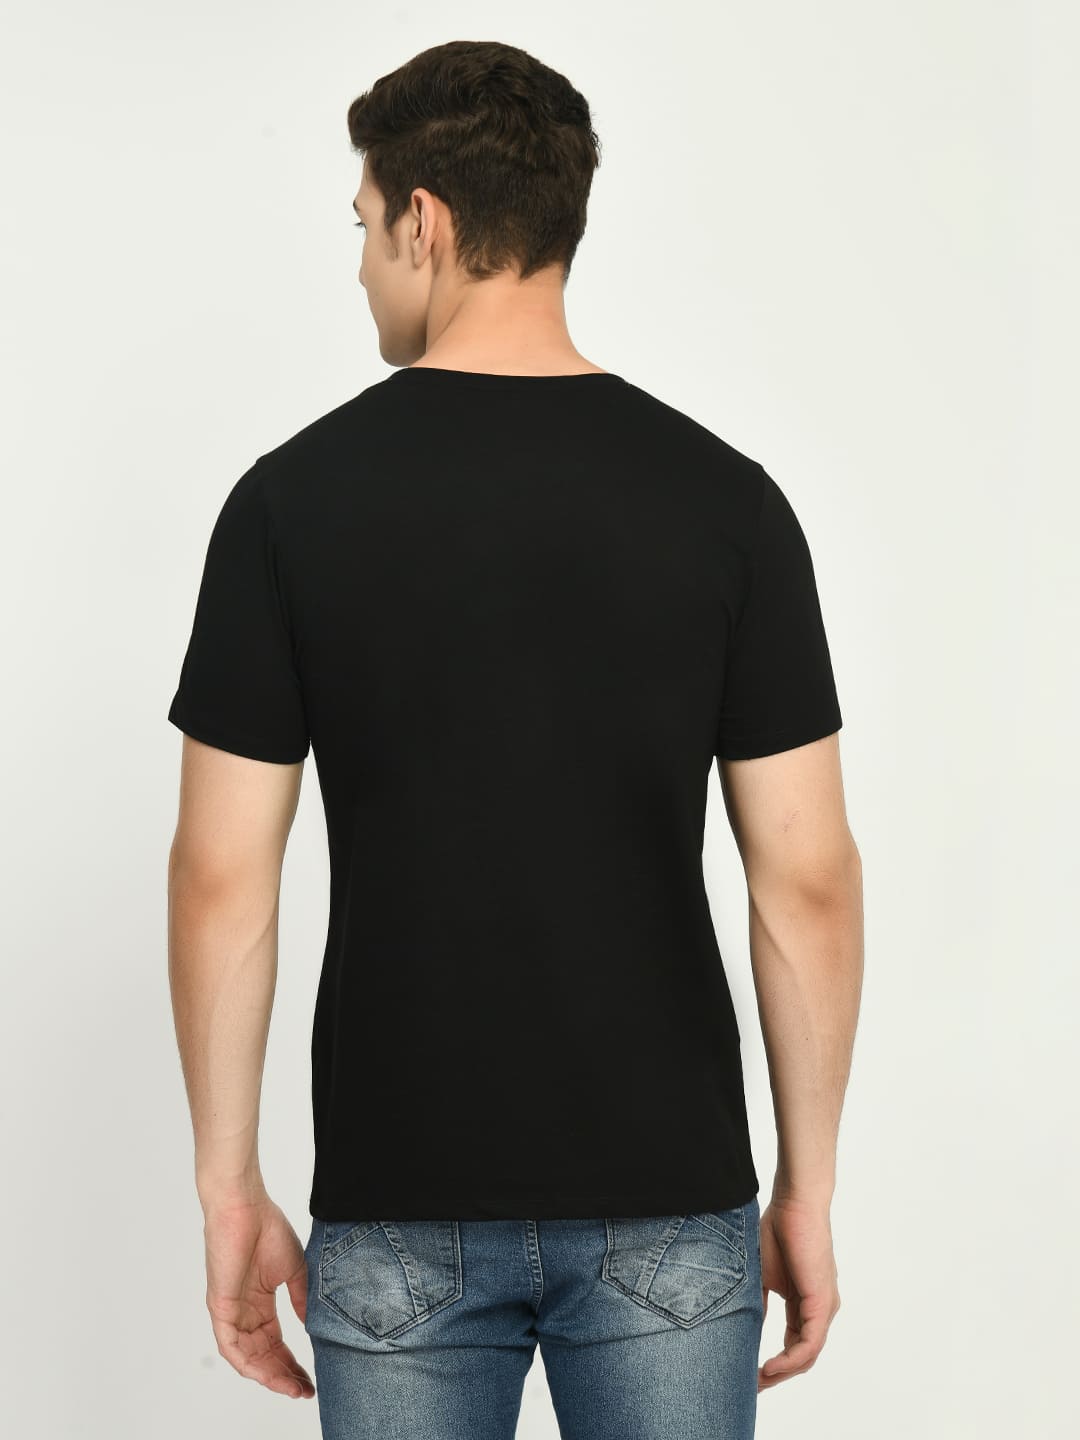 Men's Black Printed Knit T-Shirt